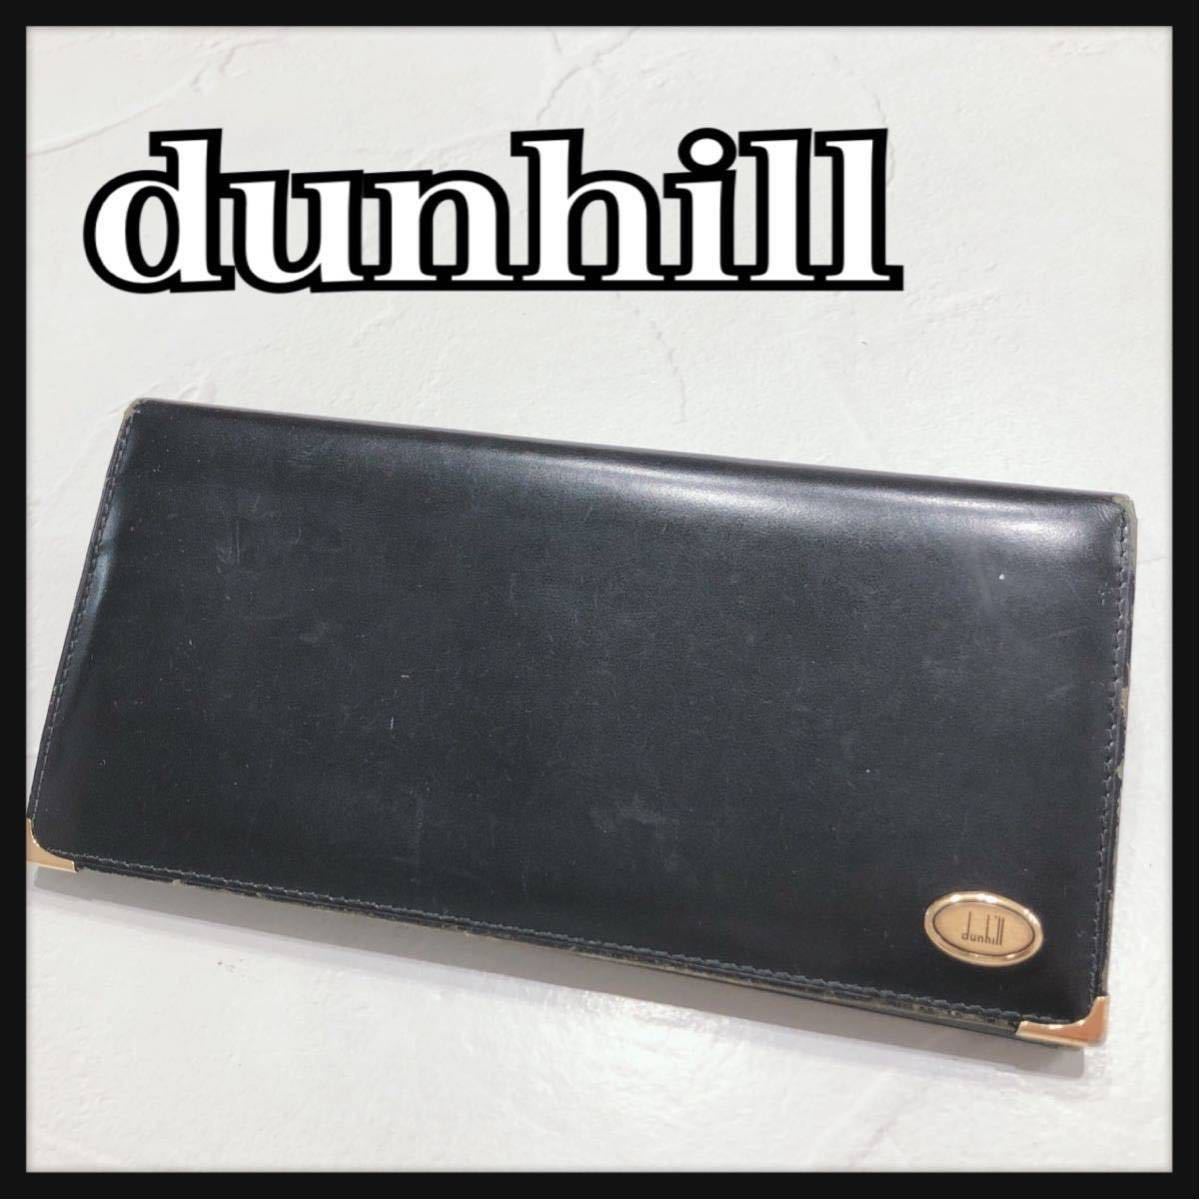 ☆dunhill☆ ダンヒル 長財布 財布 ウォレット ブラック 黒 レザー シンプル メンズ 男性 紳士 送料無料